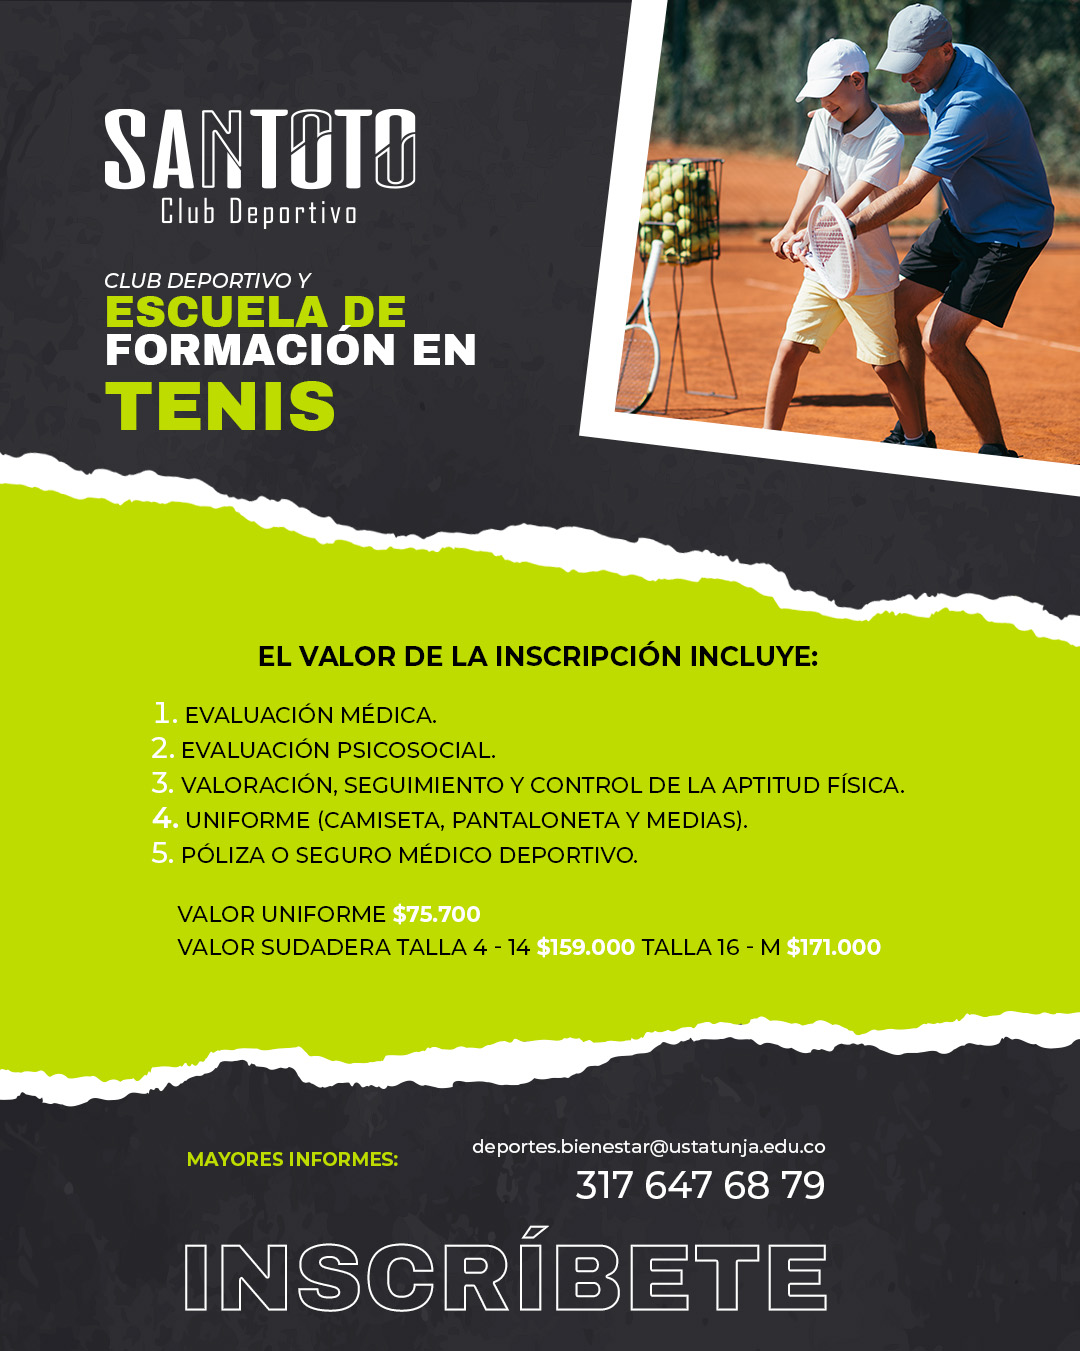 Tenis_Club_Deportivo_Santoto_Tunja_1